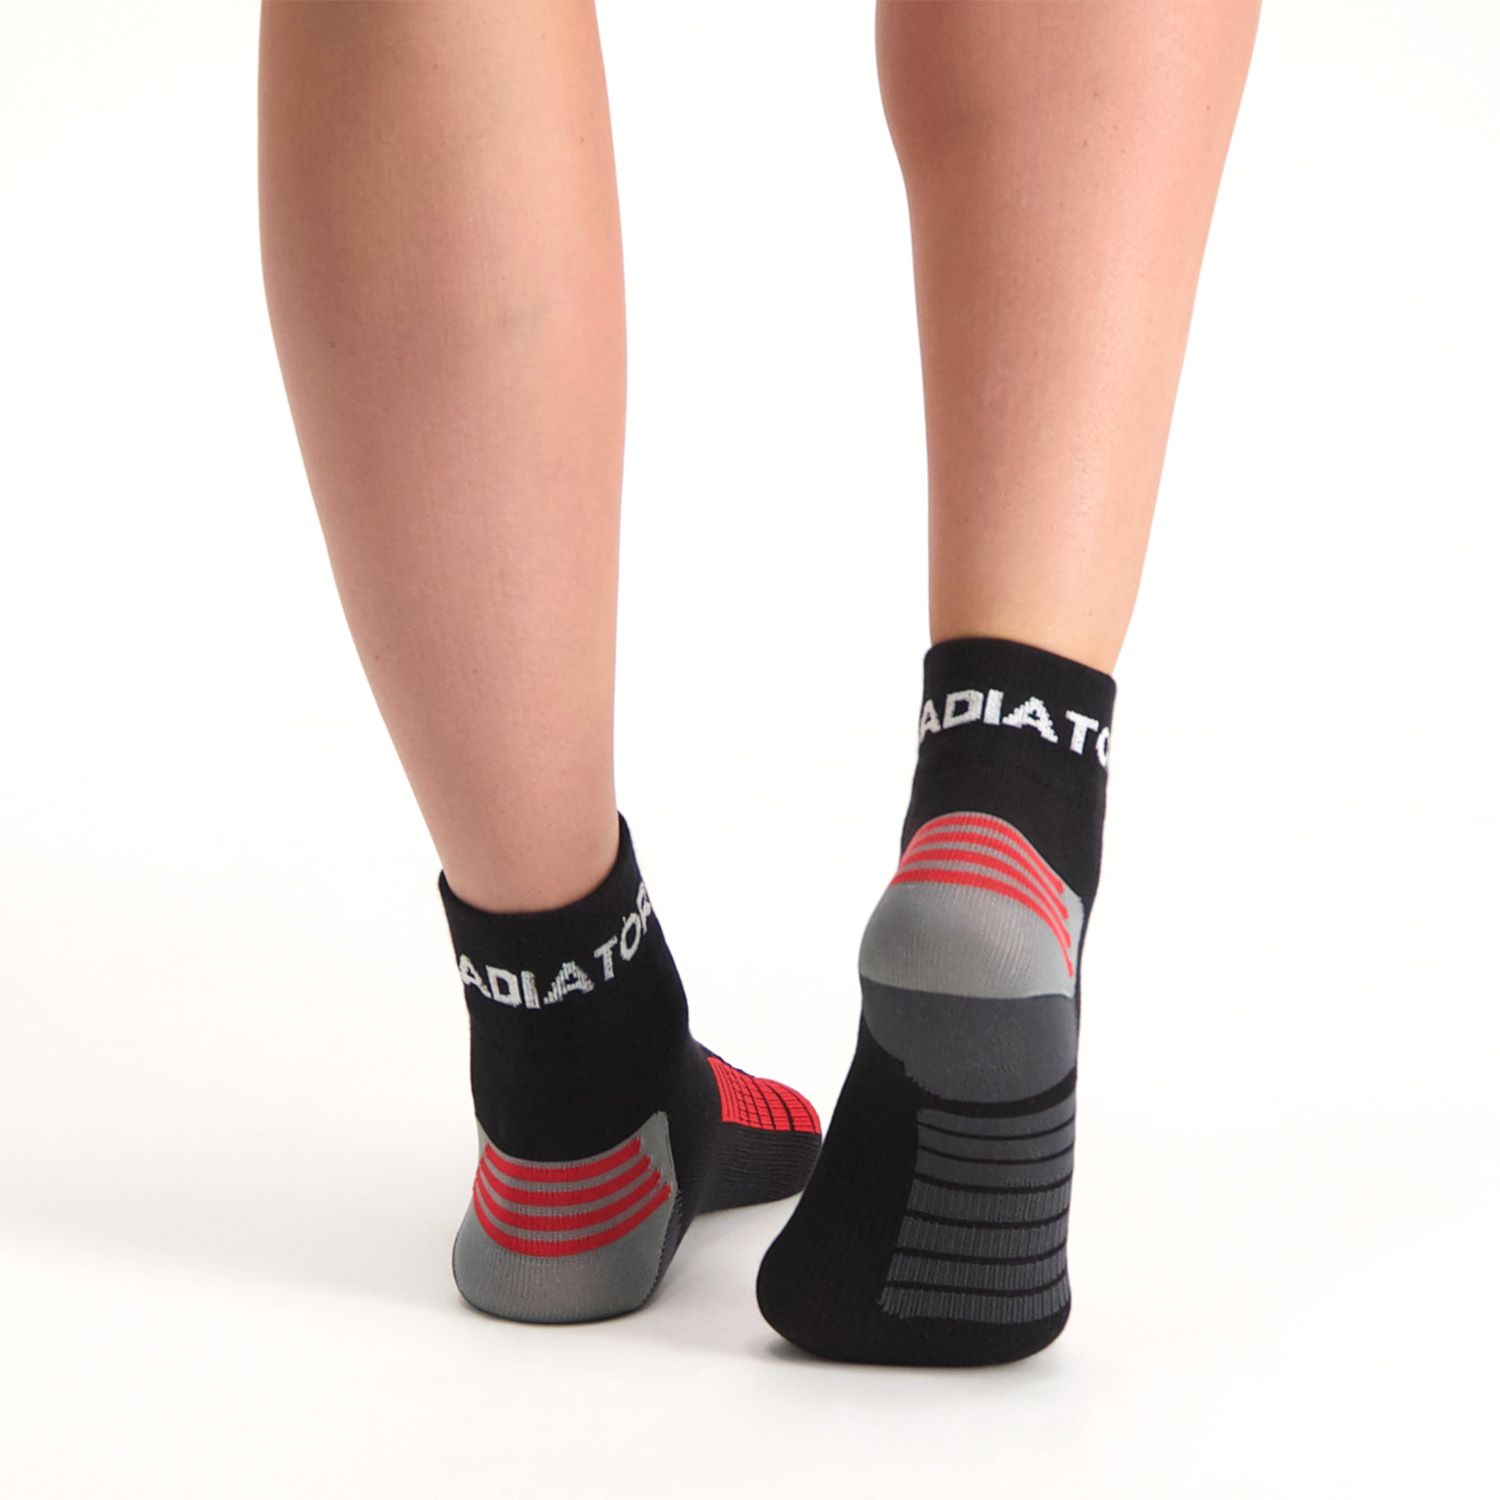 Gladiator Sports Compression Socks back view